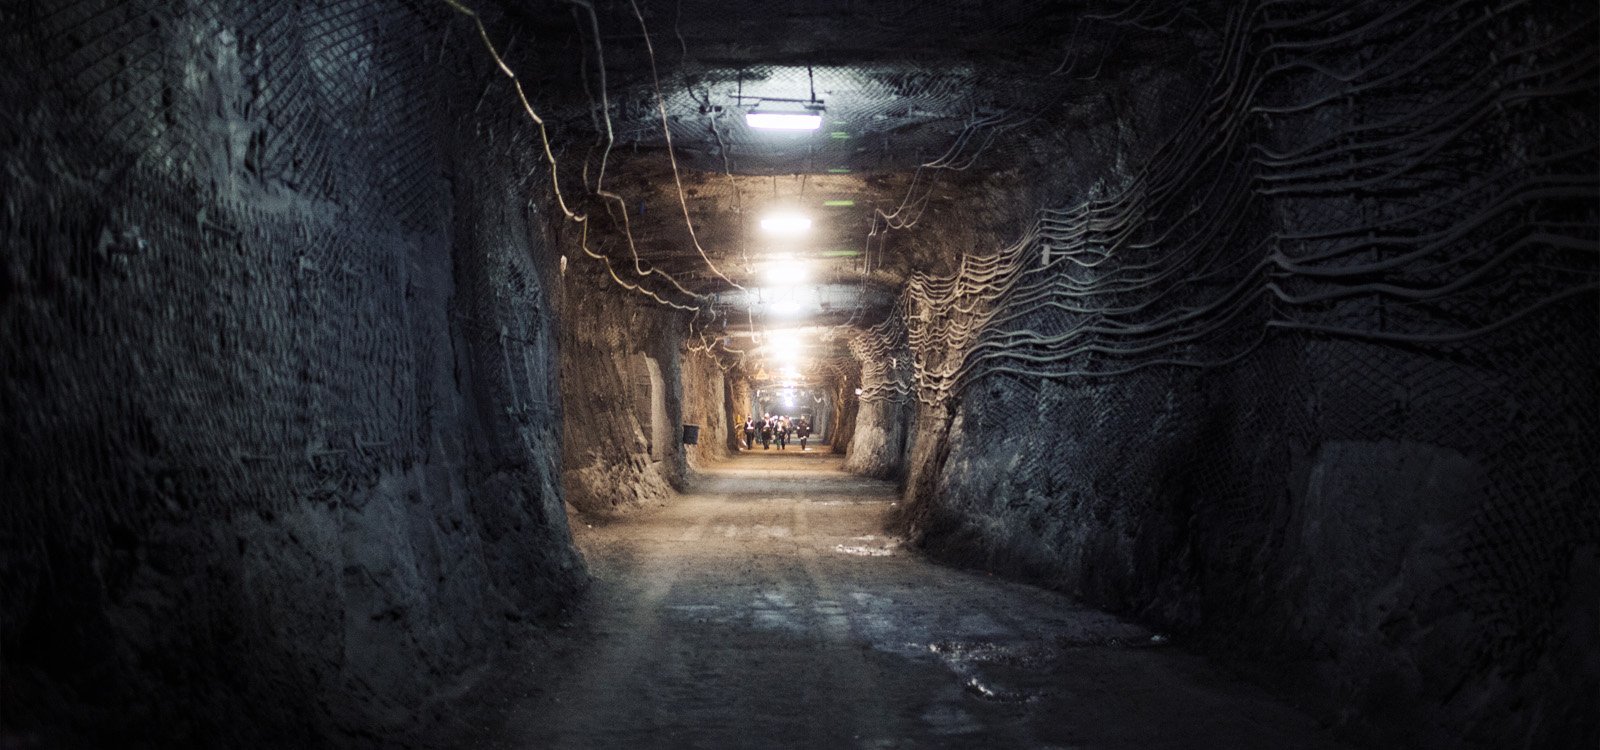 Every day, around 6,000 people head underground to work in the Rudna mine.